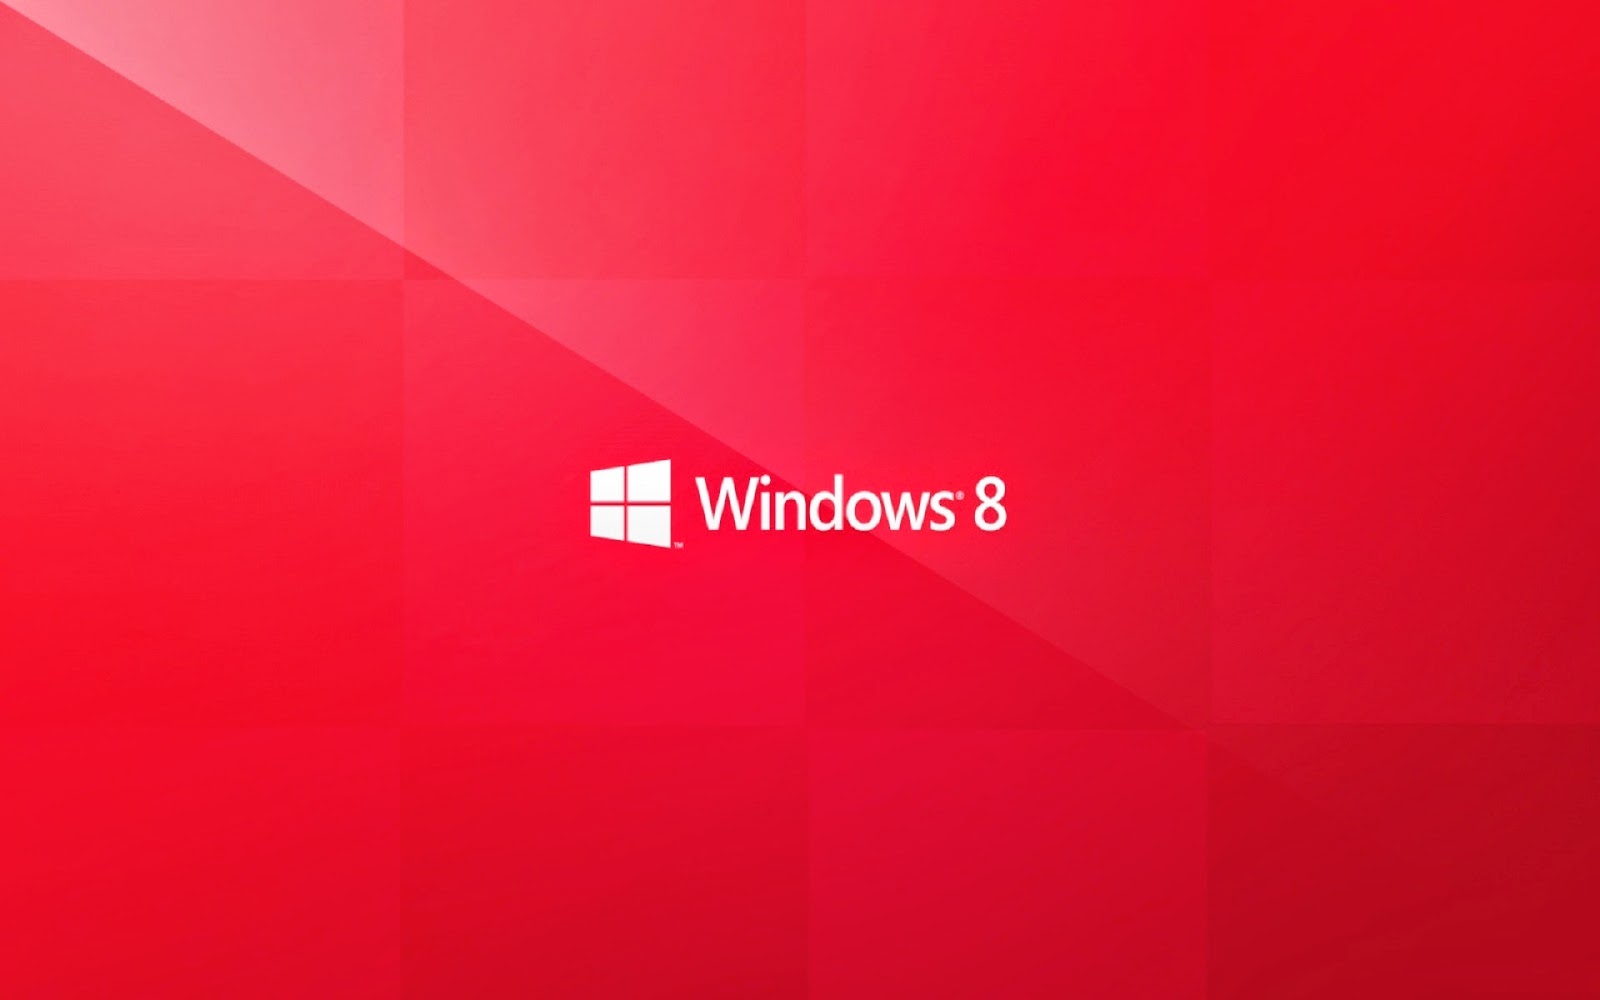 Windows 8.1 Wallpaper HD 1366x768 - WallpaperSafari